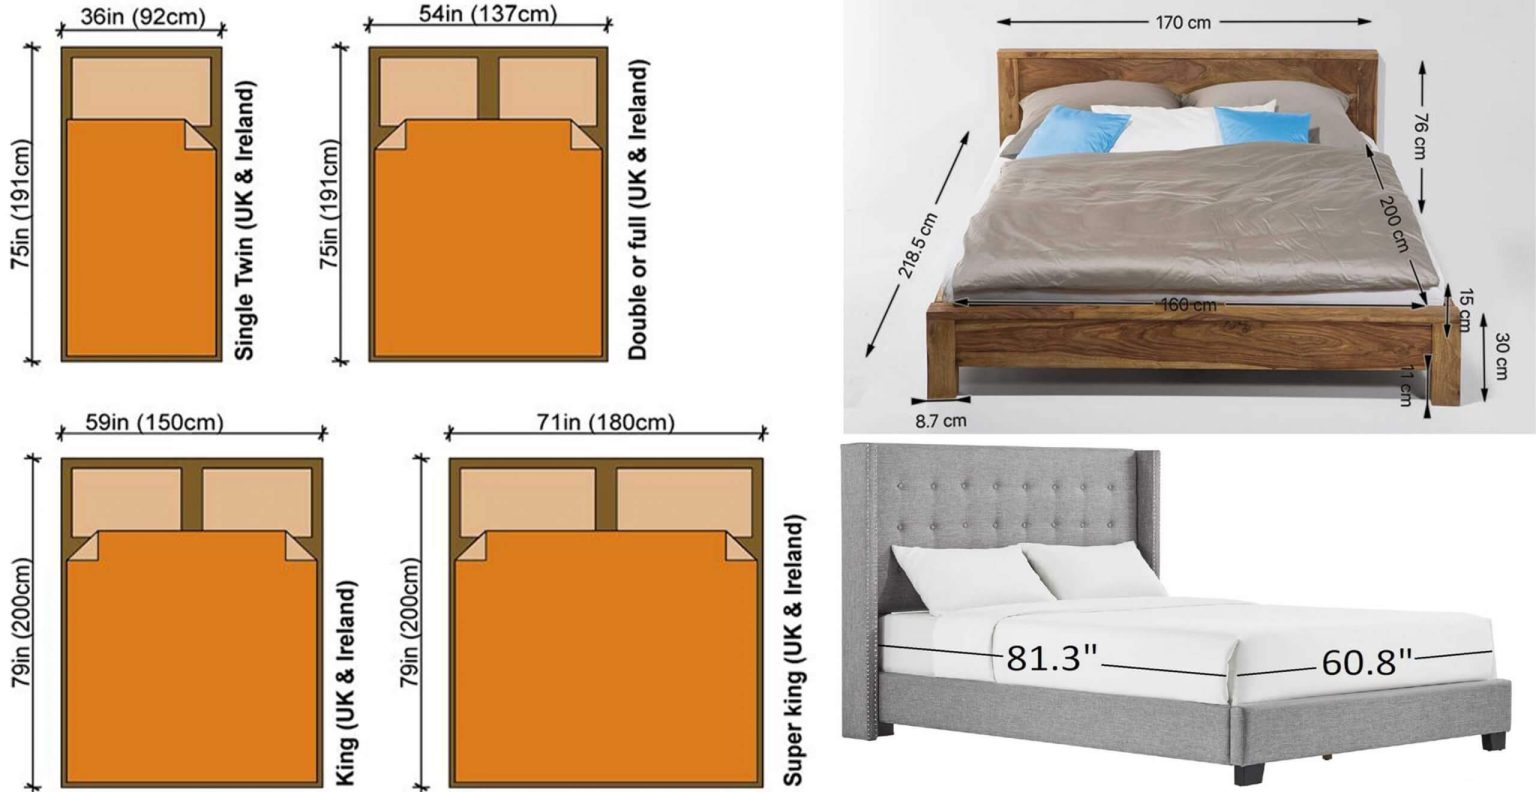 standard bedroom furniture dimensions